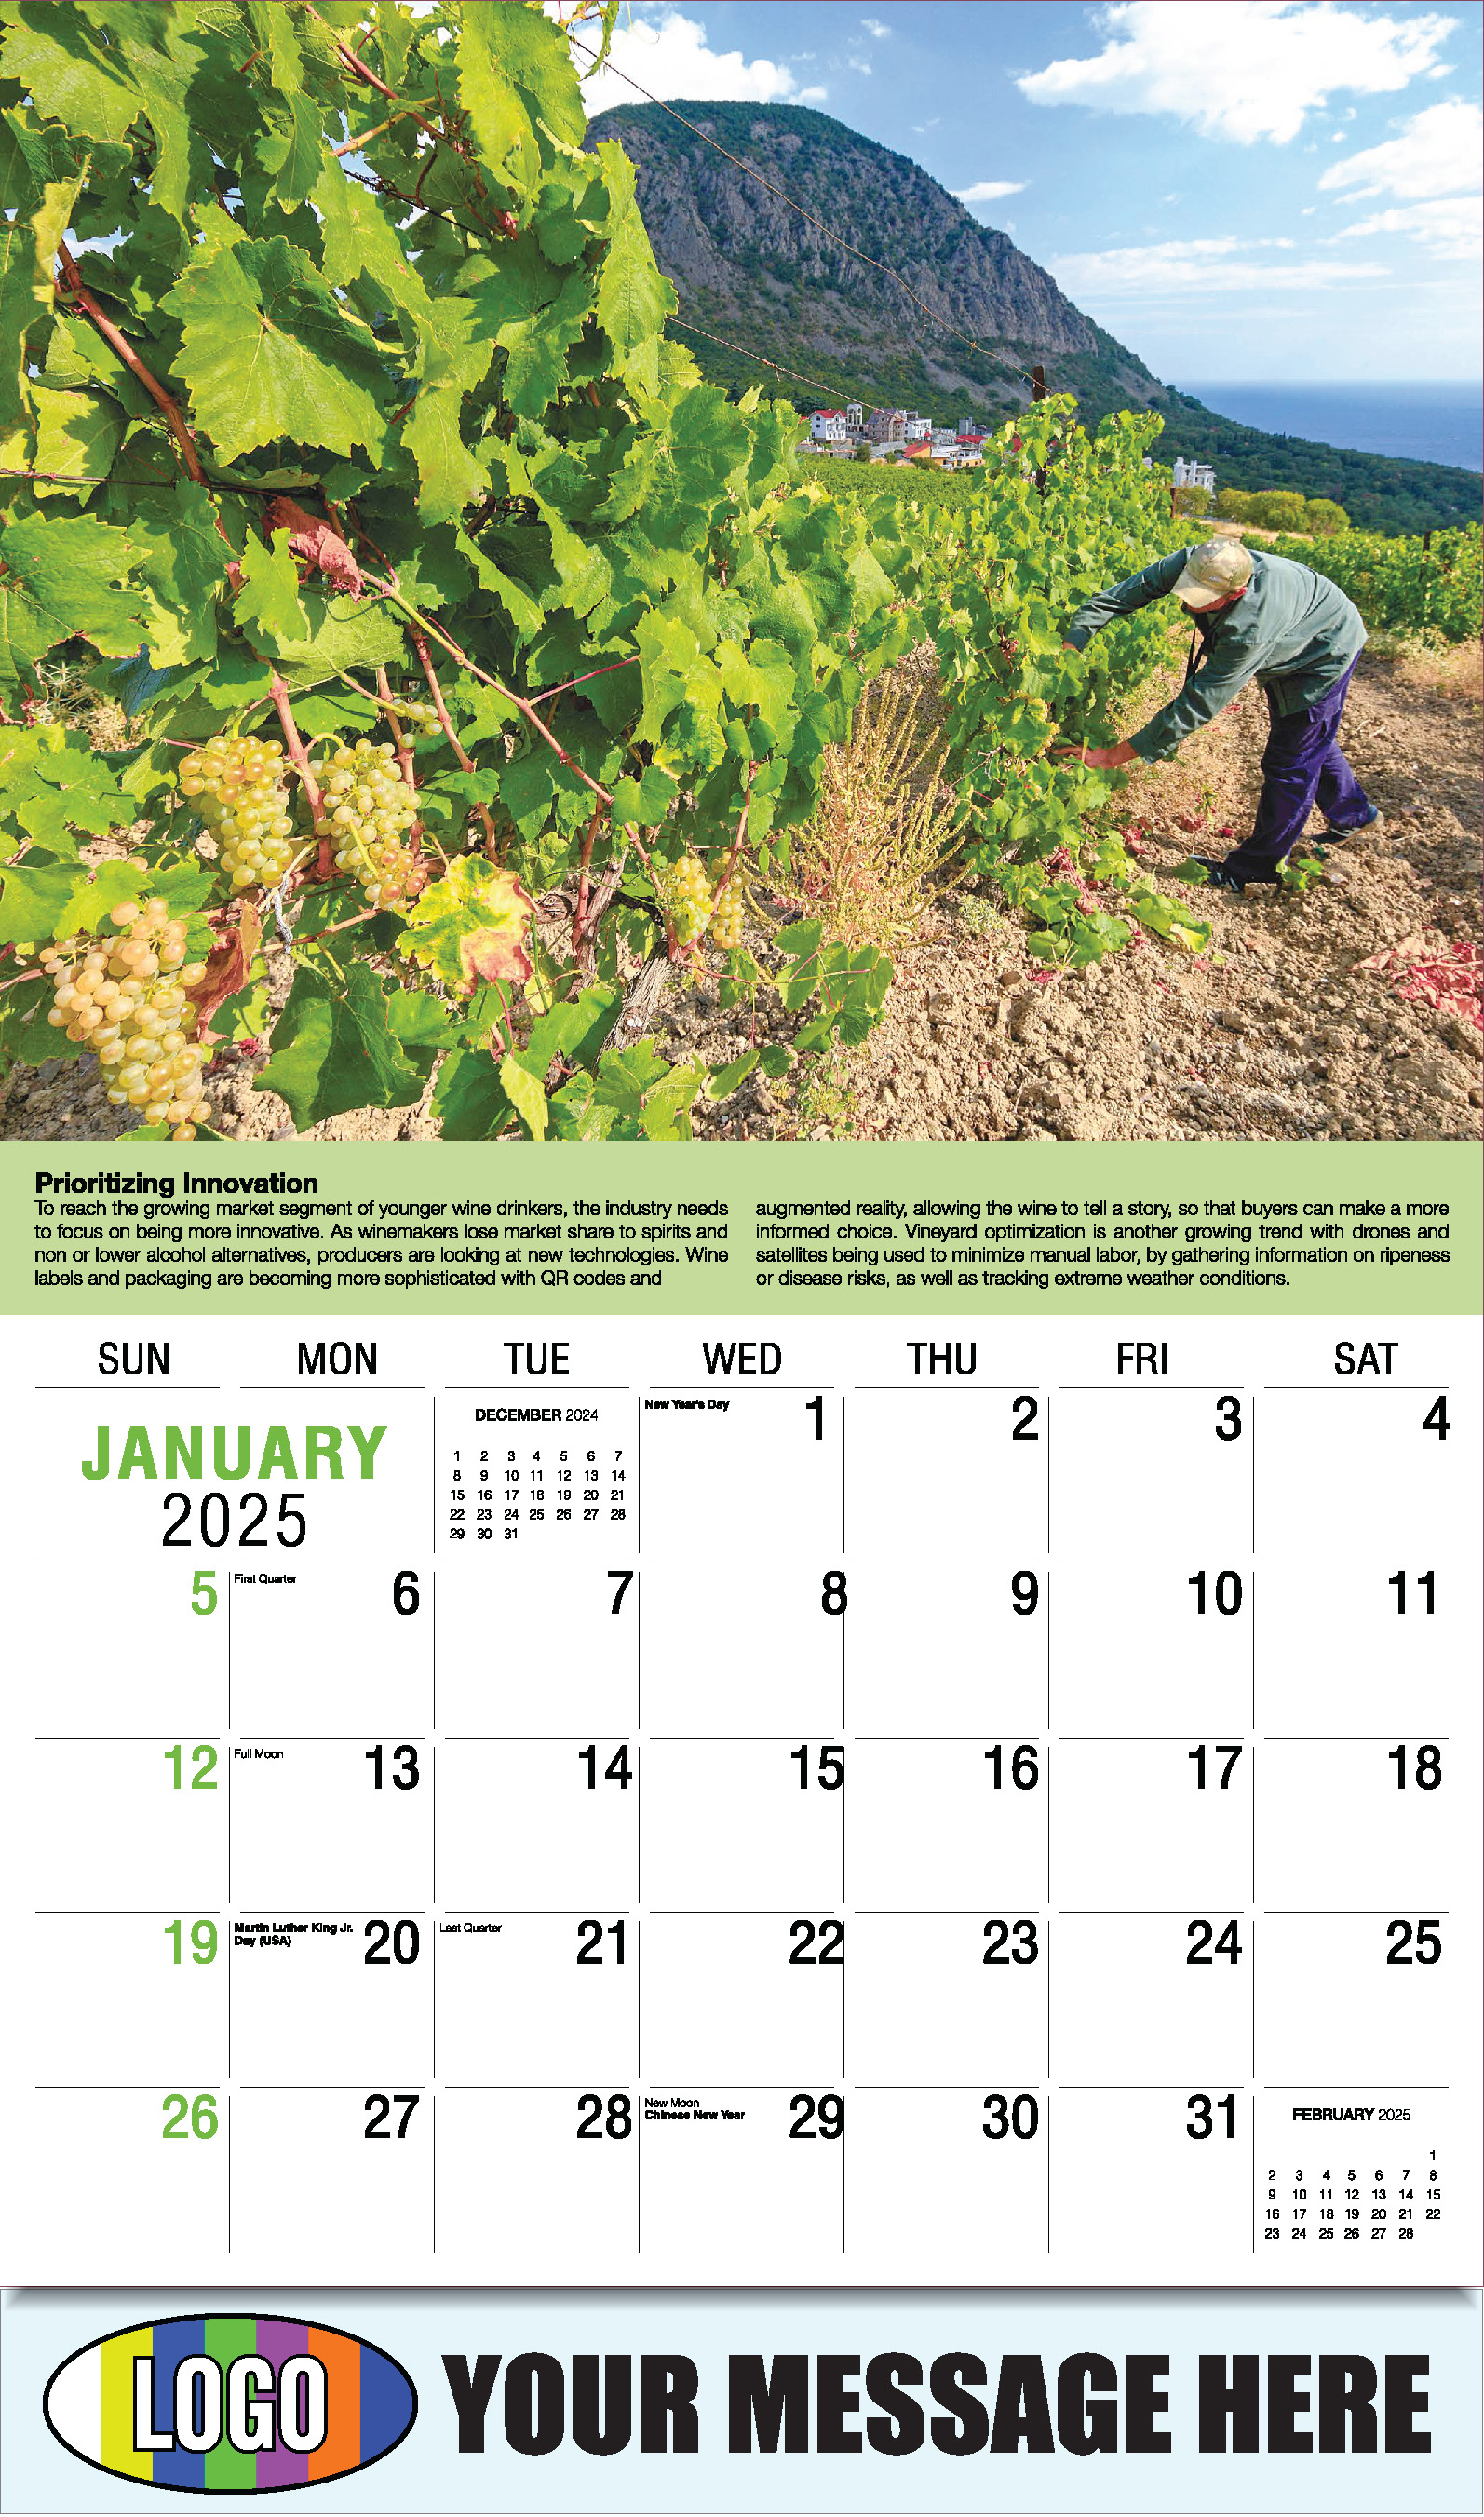 Vintages - Wine Tips 2025 Business Promo Calendar - January